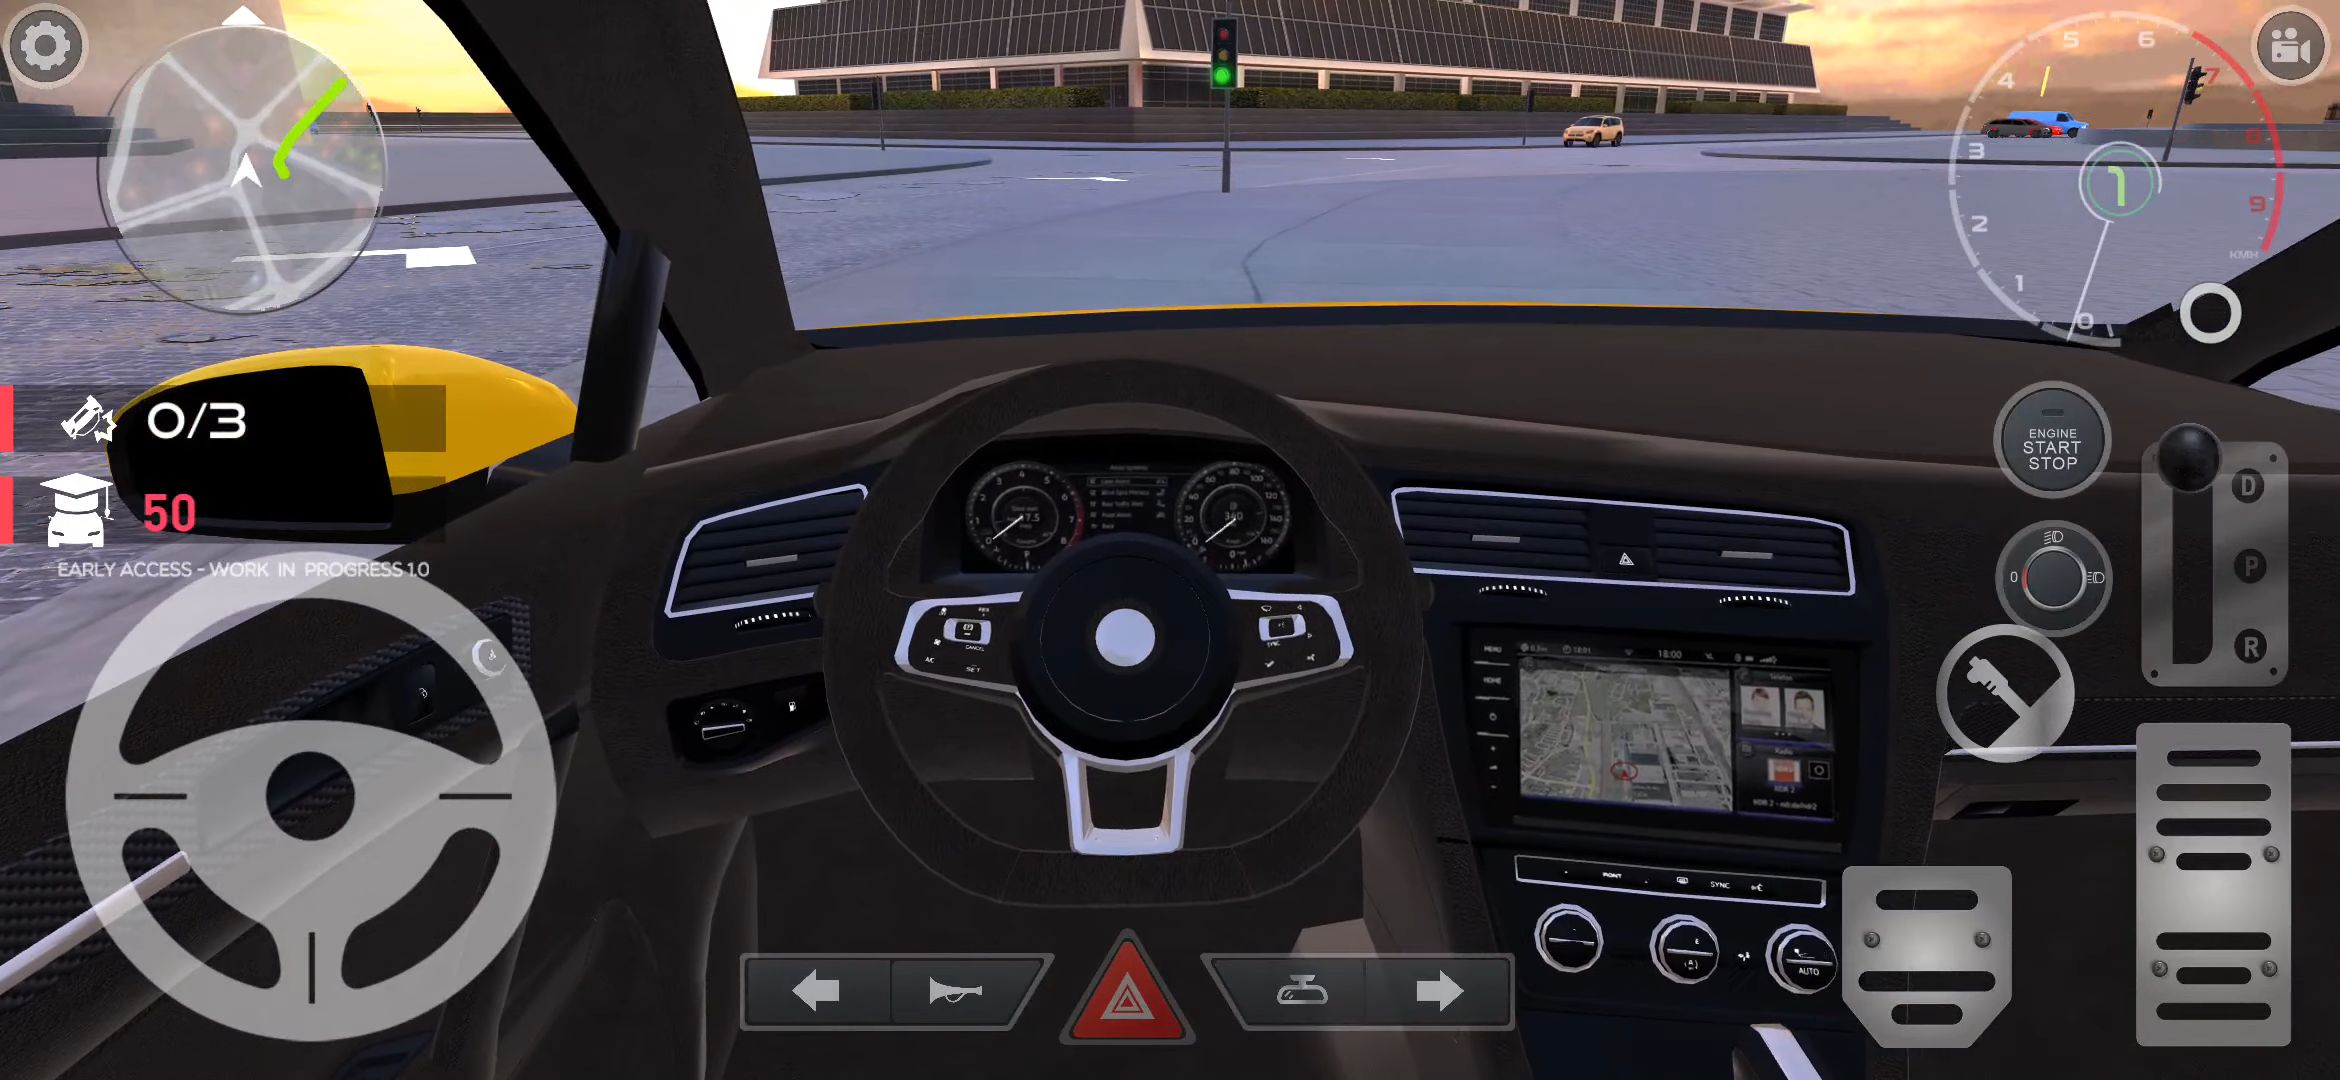 PetrolHead : Traffic Quests - Joyful City Driving para Android